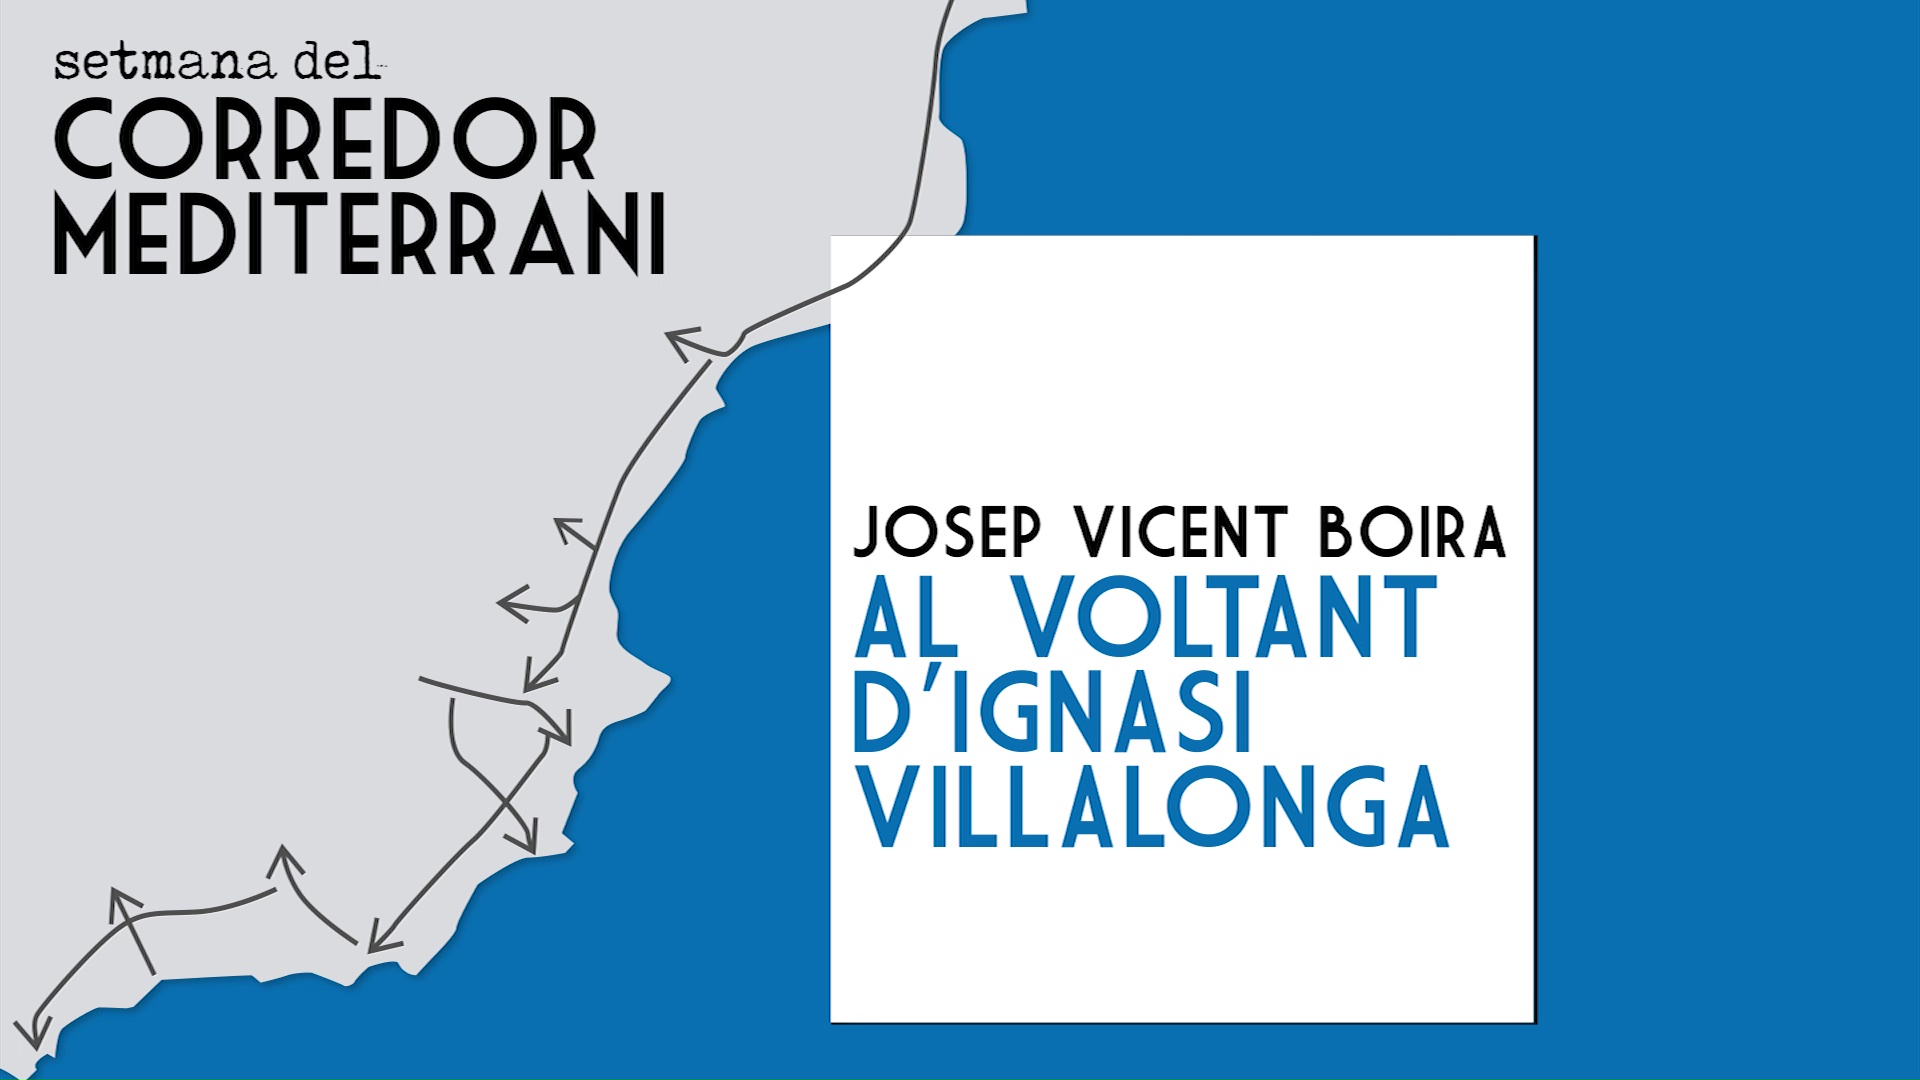 Setmana del corredor Mediterrani - Josep Vicent Boira